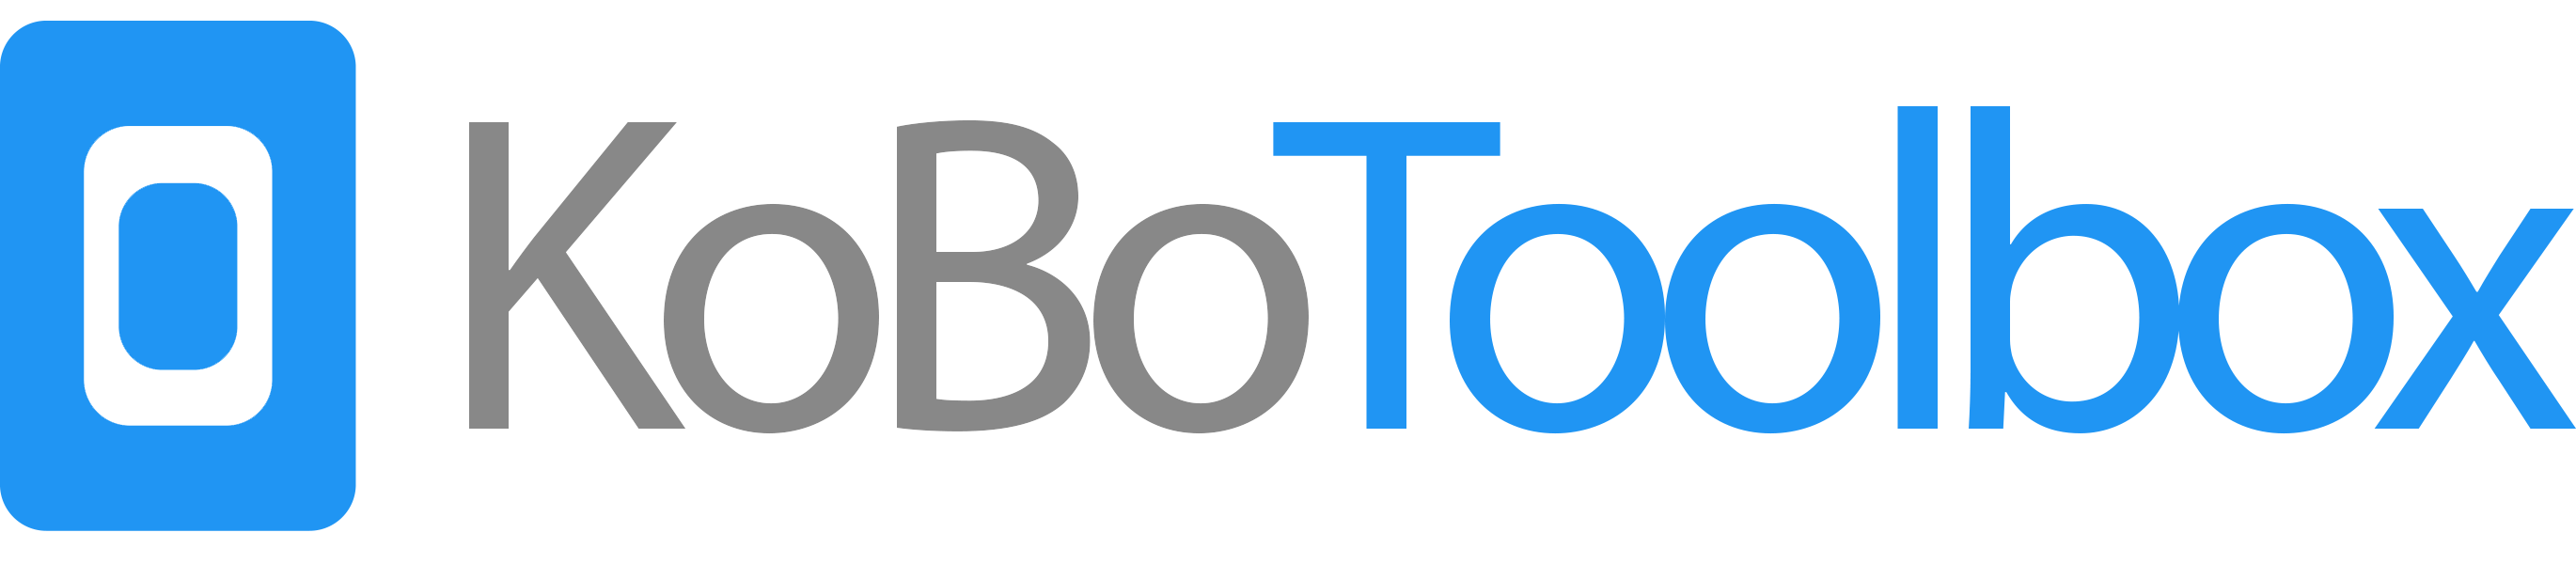 logo Kobo Toolbox